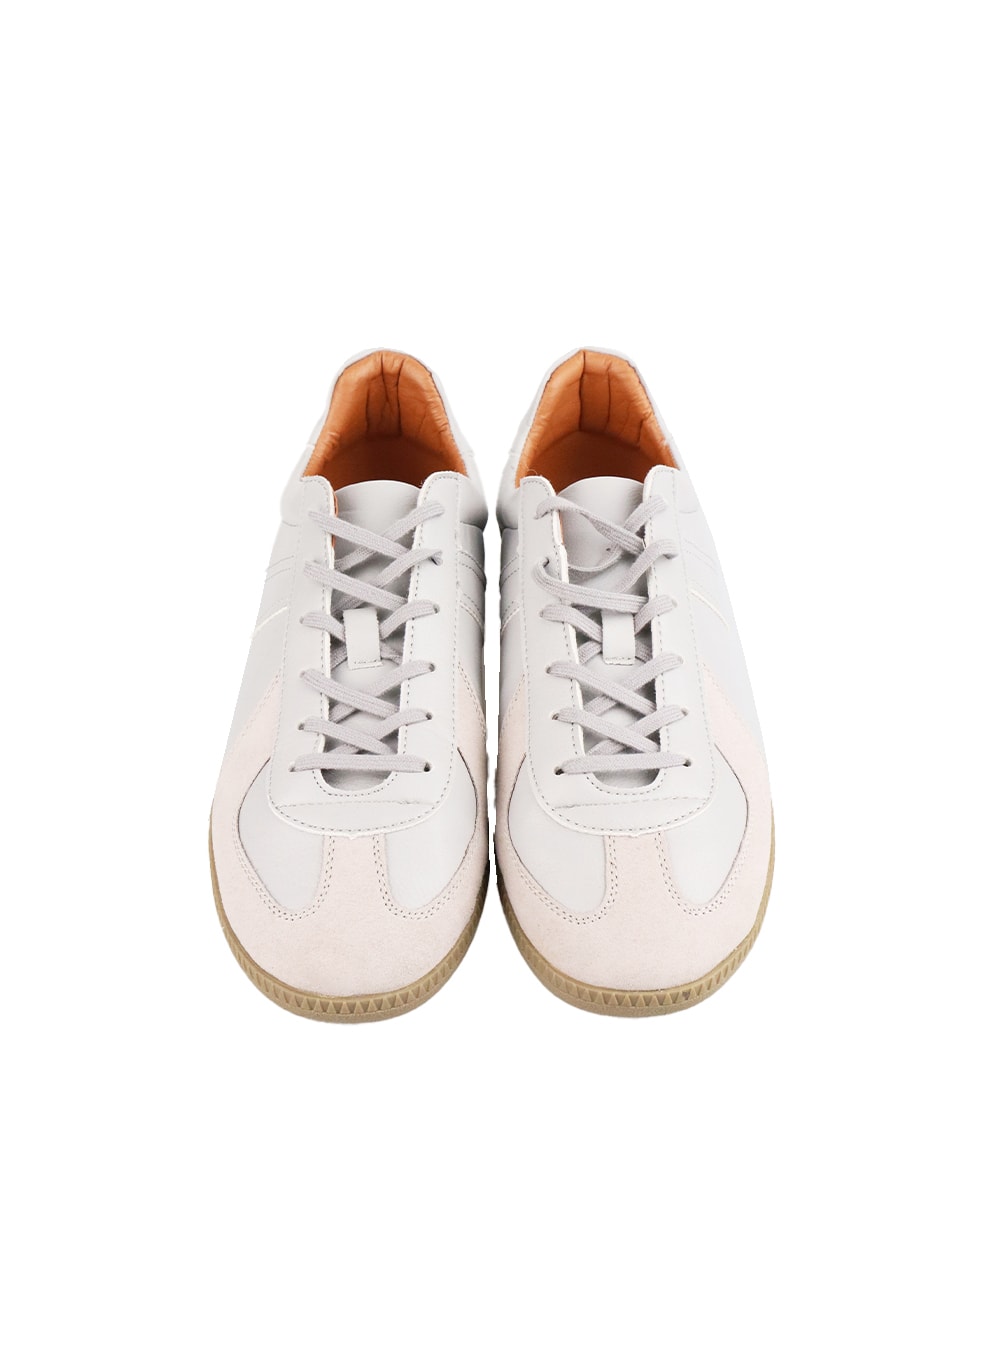 mens-multipiece-sneakers-ia401 / Light gray